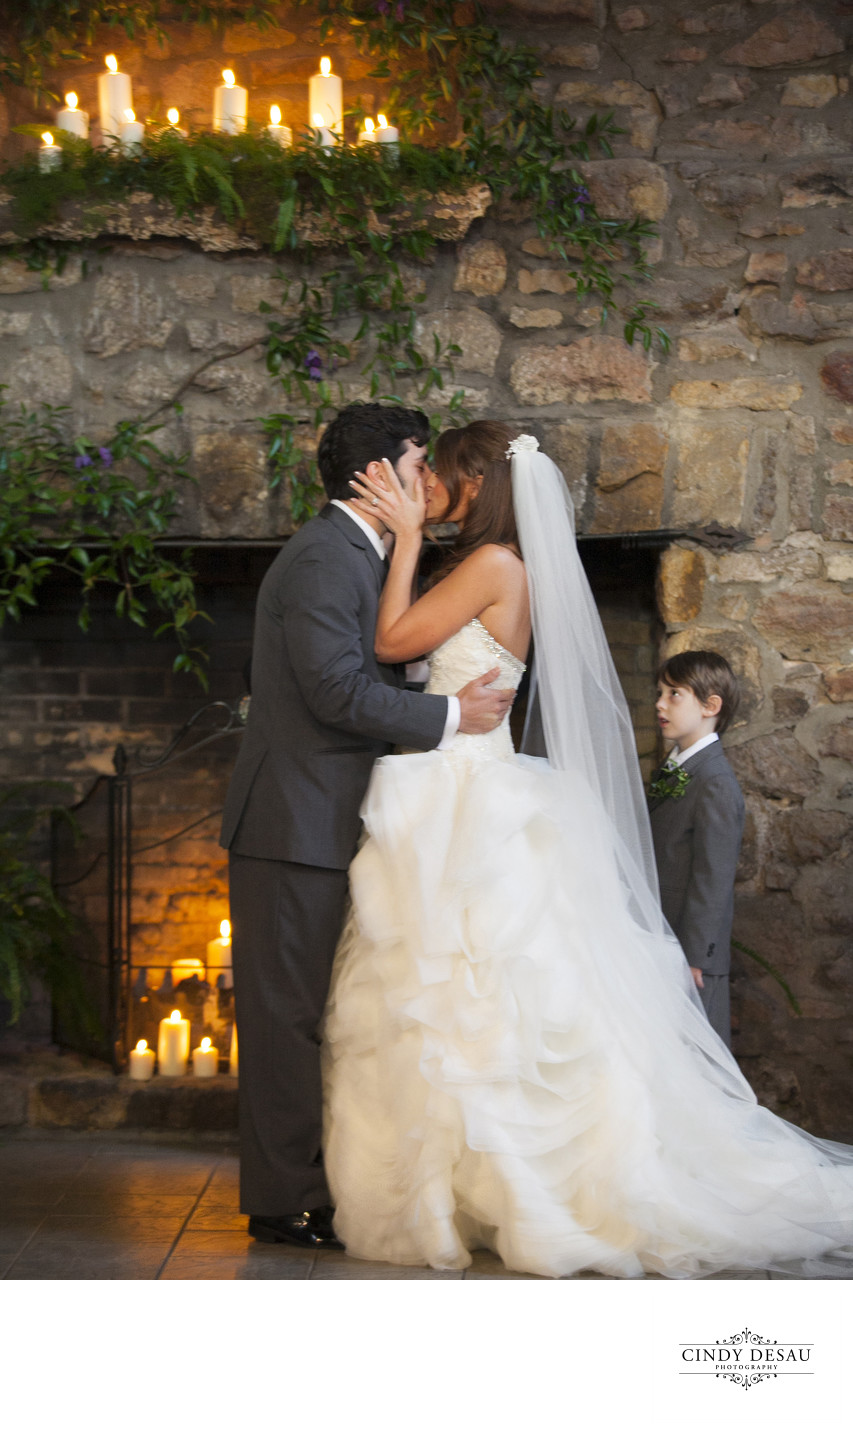 Ring Bearer Watches First Wedded Kiss Photograph